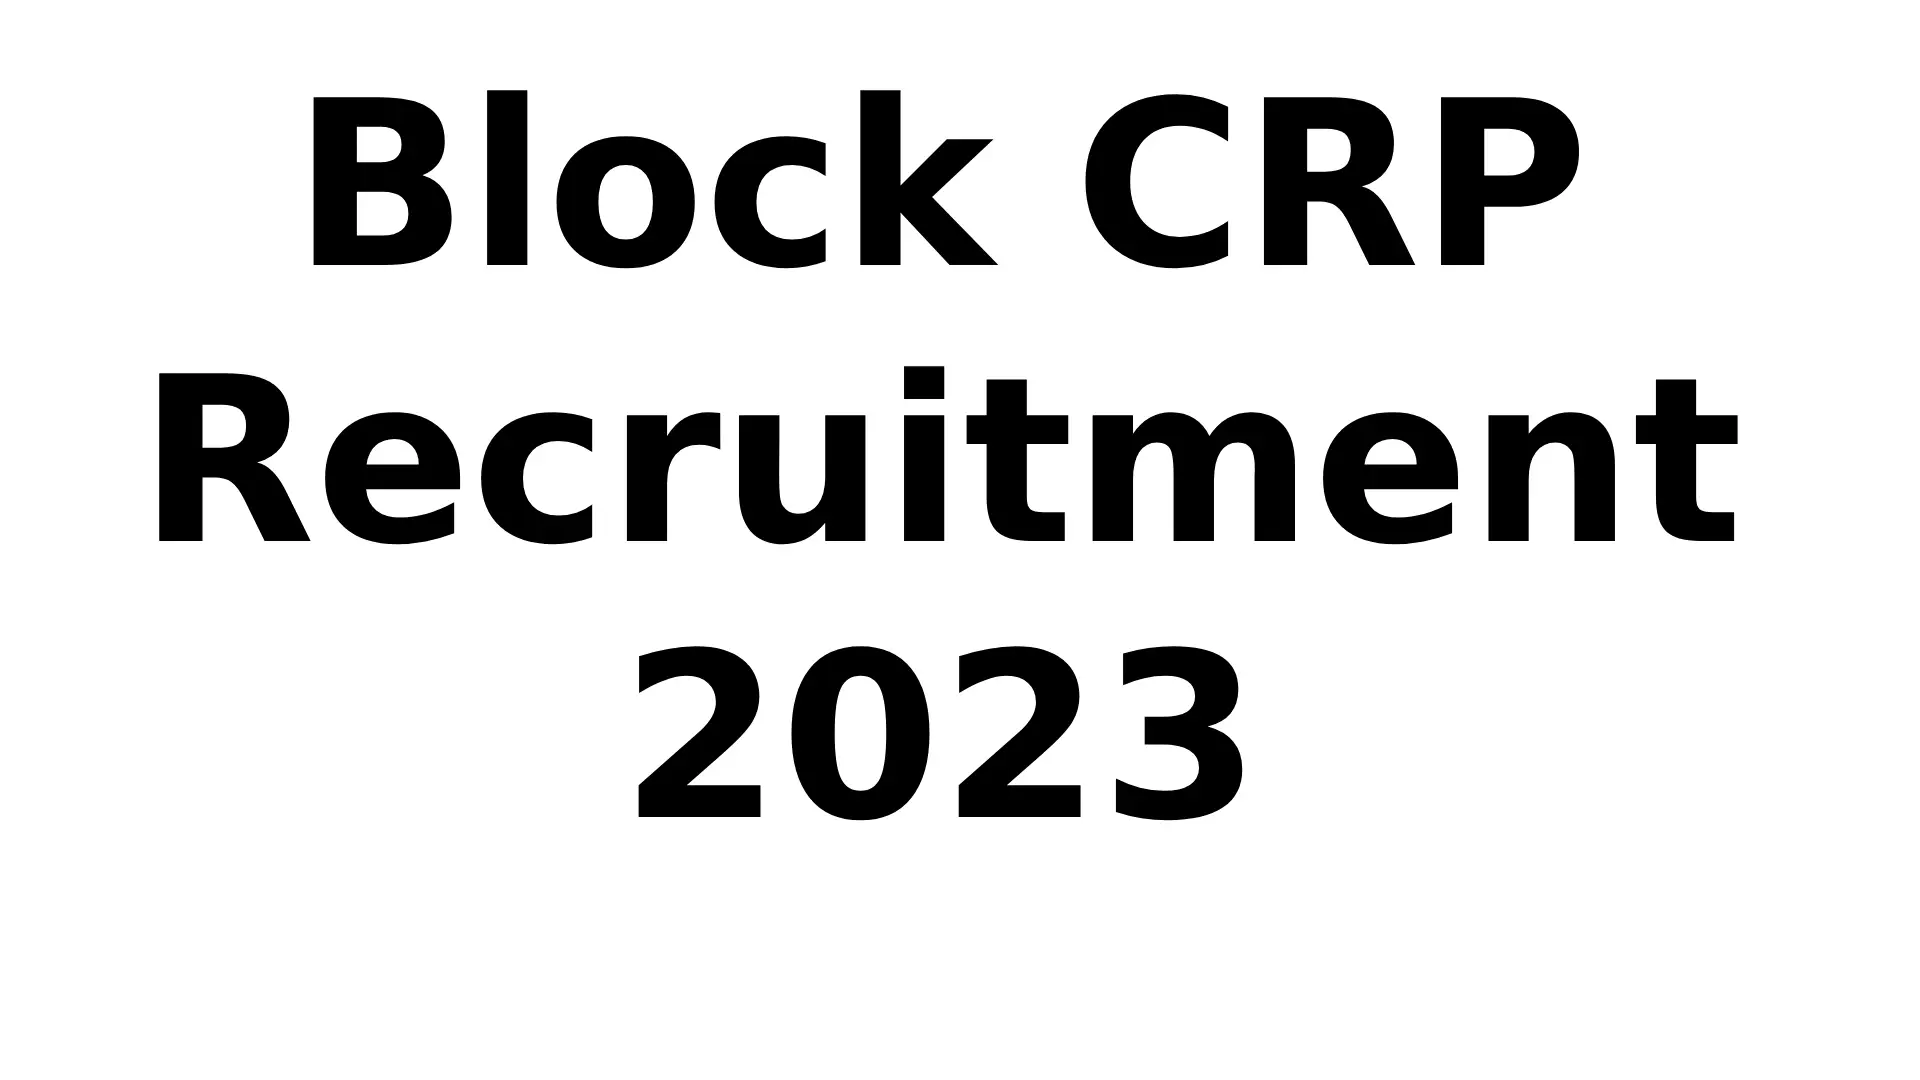 Block CRP Recruitment 2023